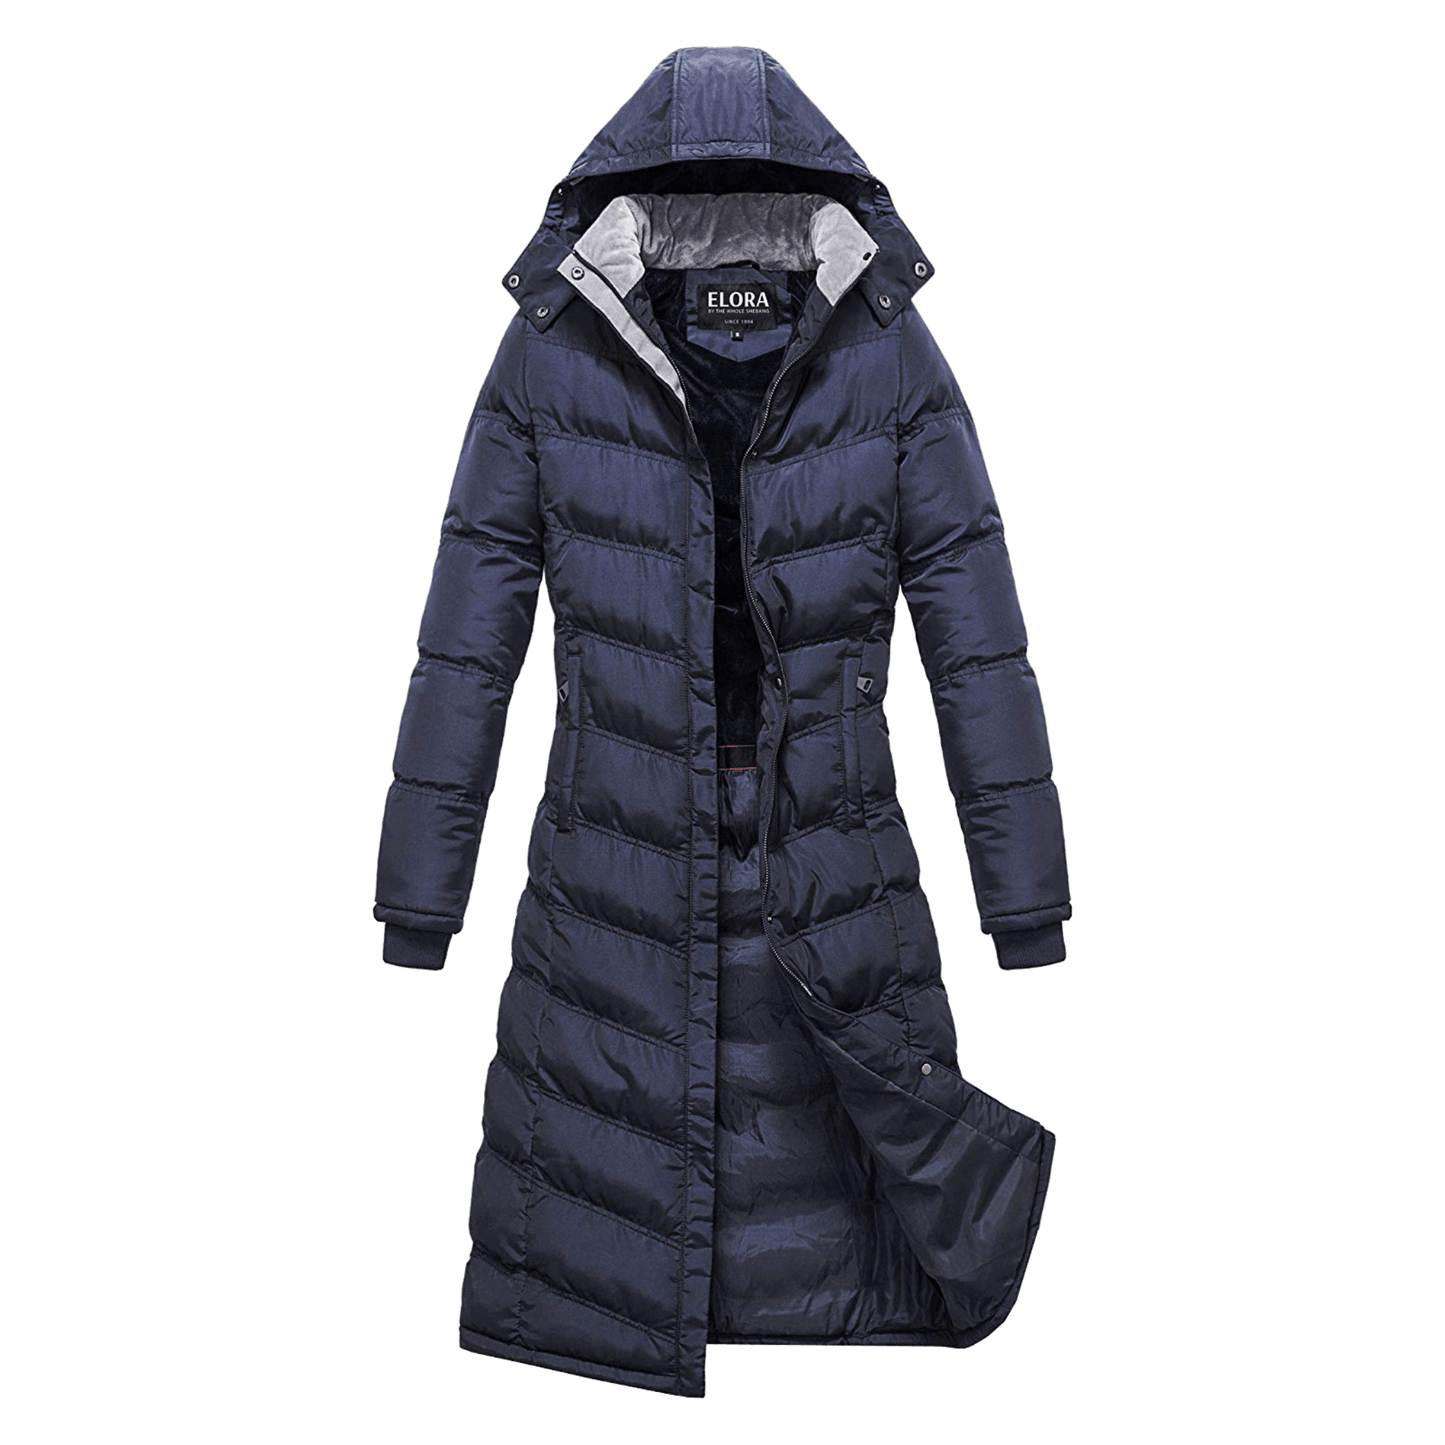 ELORA Heavyweight Women's Water Resistant Puffer Winter Full-Length Coat with Hood and Fleece Lining